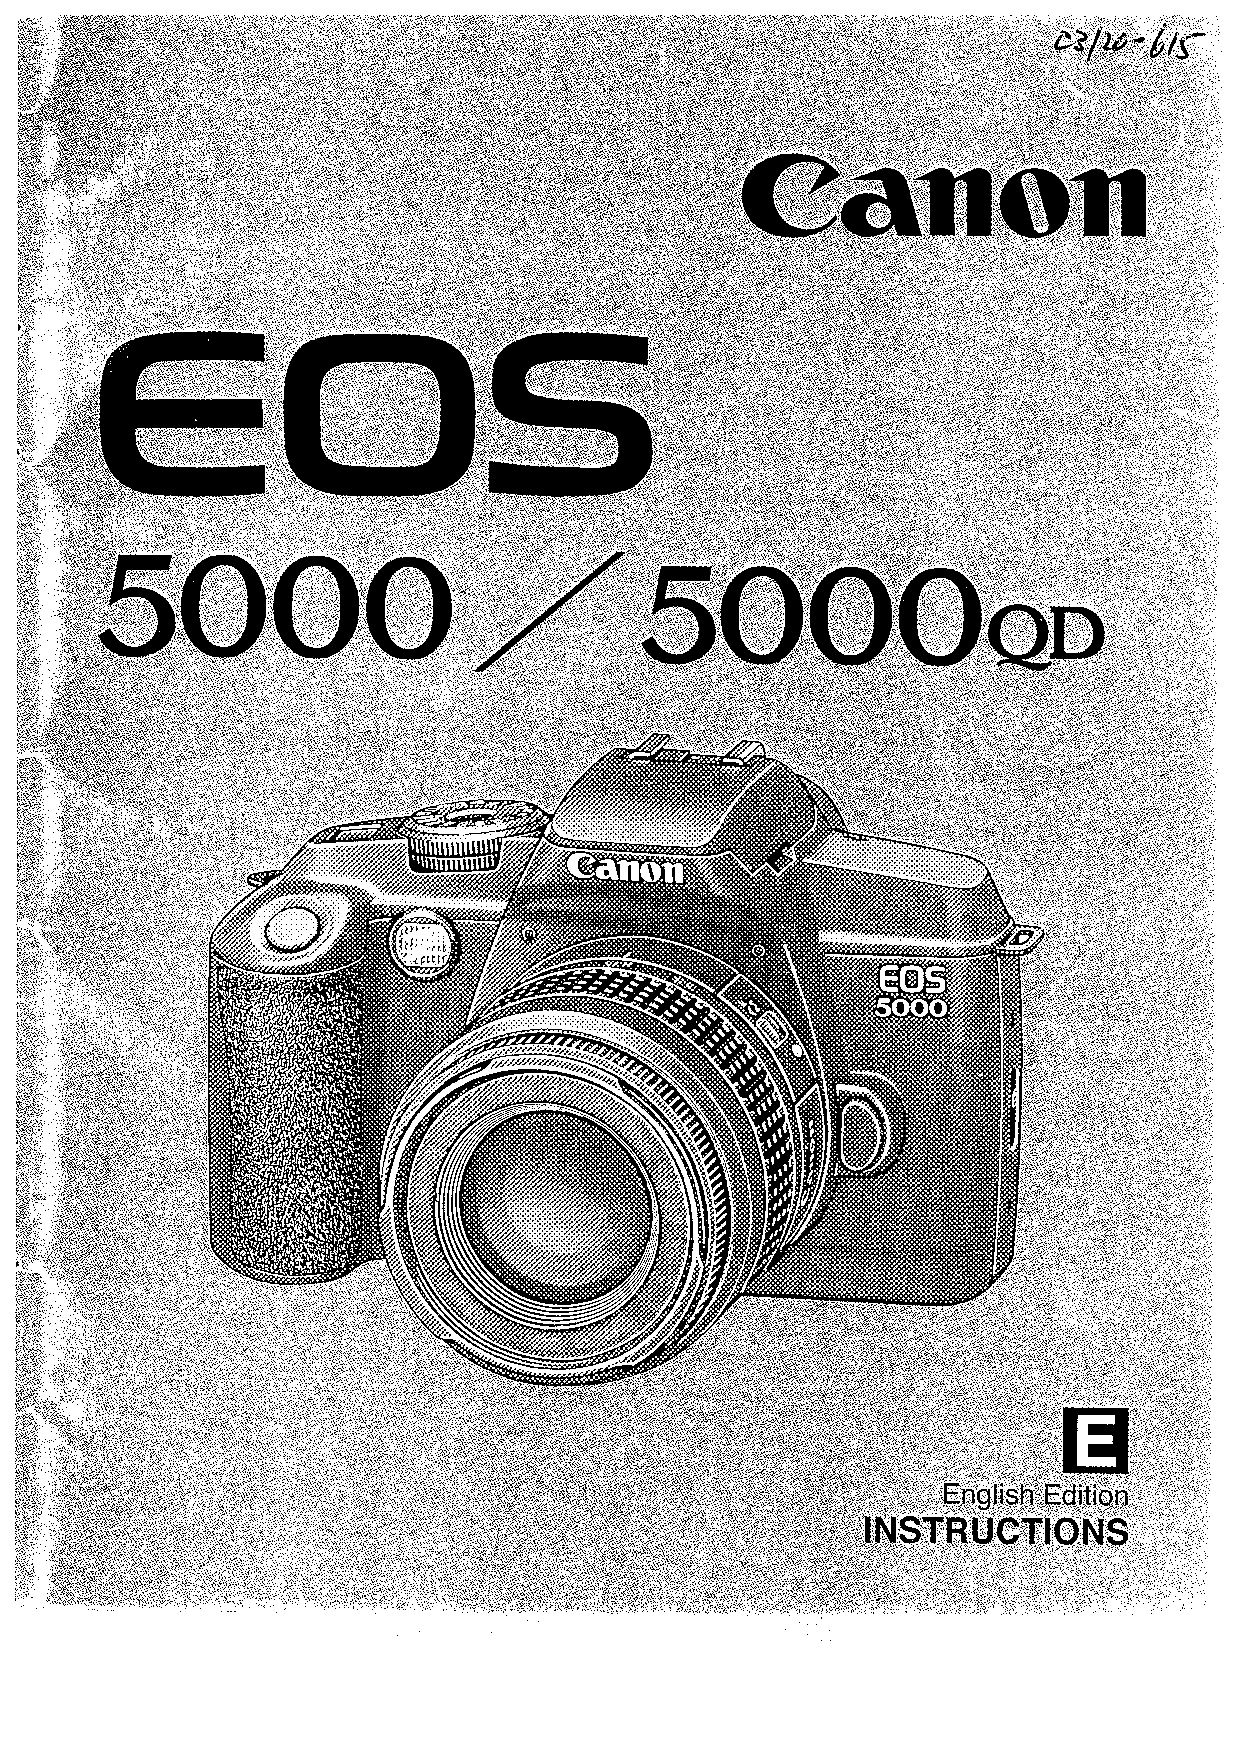 Canon BJC-5000, 5000QD User Manual